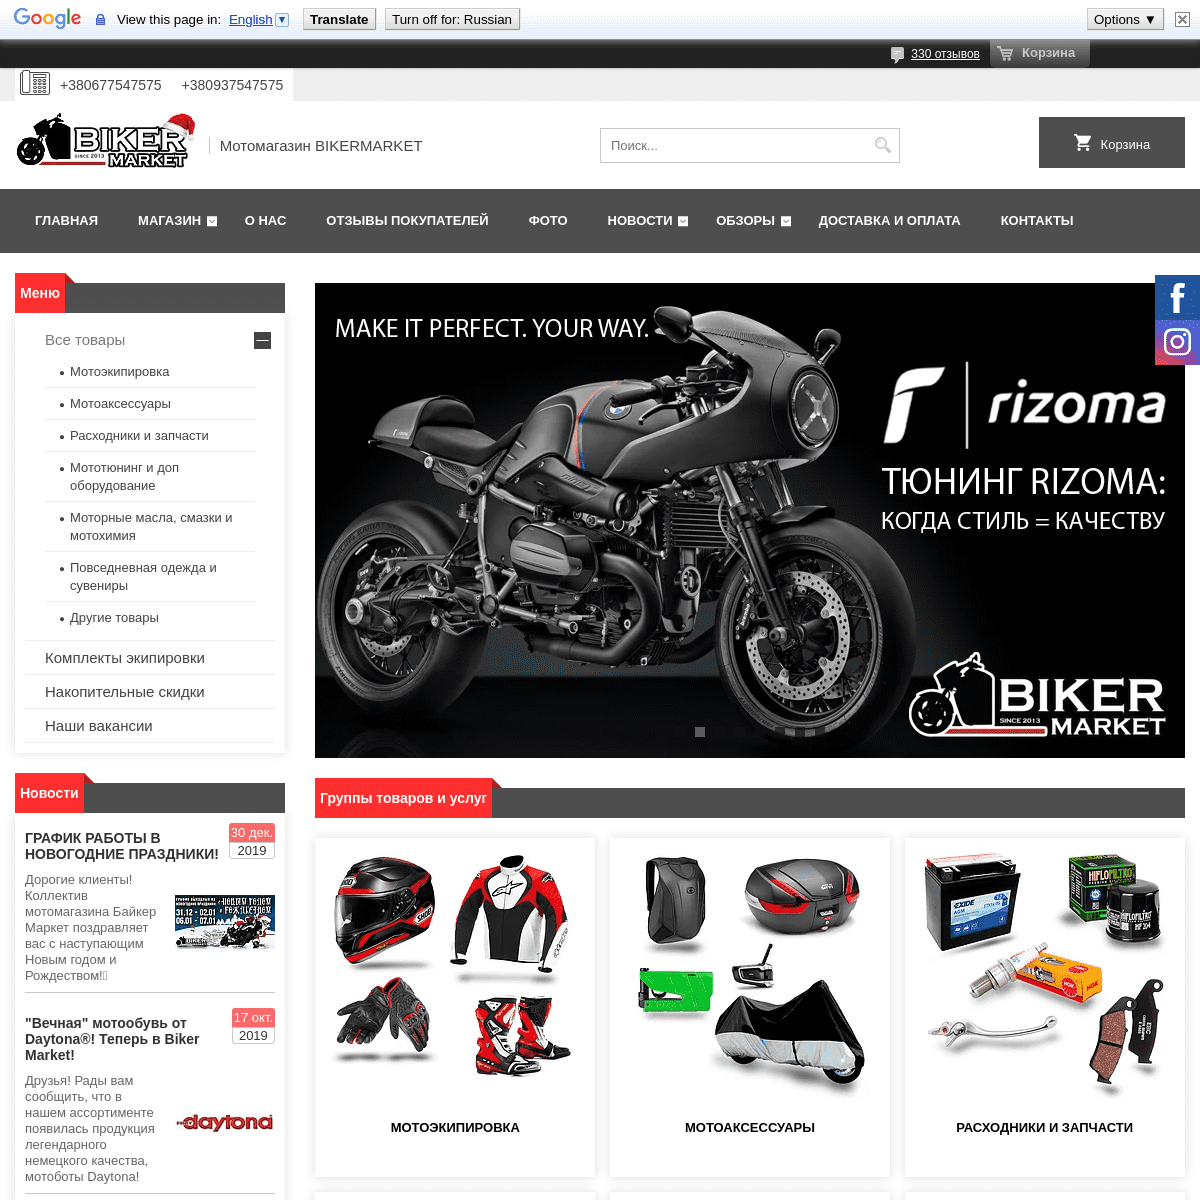 A complete backup of bikermarket.com.ua